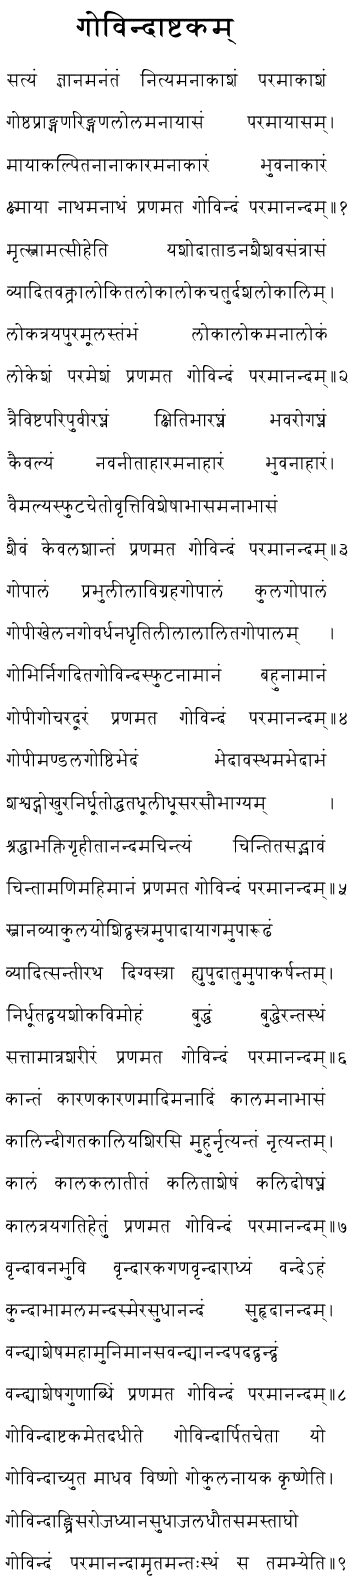 108 Names Of Lord Vishnu In Tamil Pdf